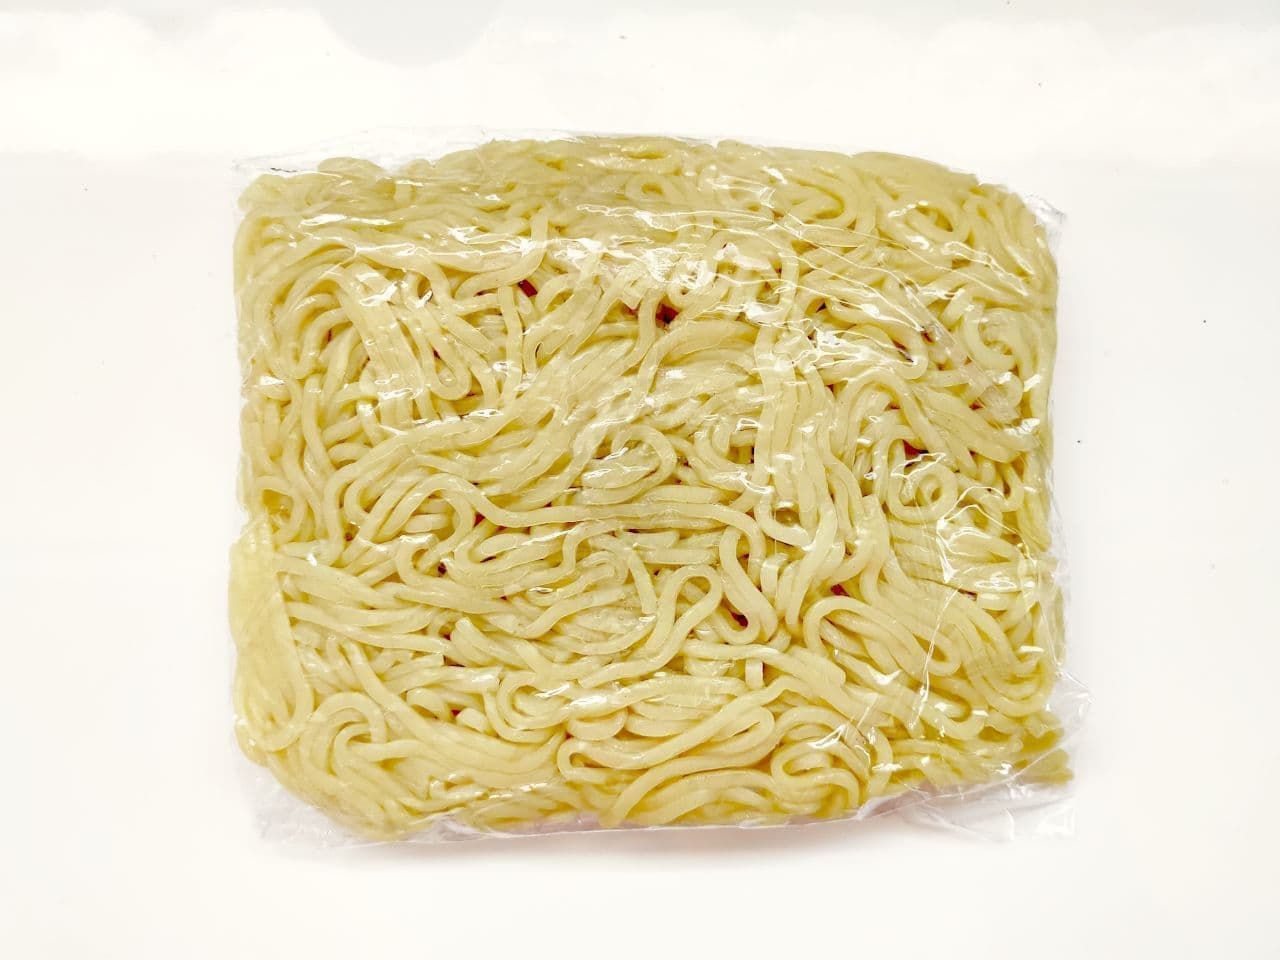 "Karasoba-style" recipe made with yakisoba noodles and mackerel cans